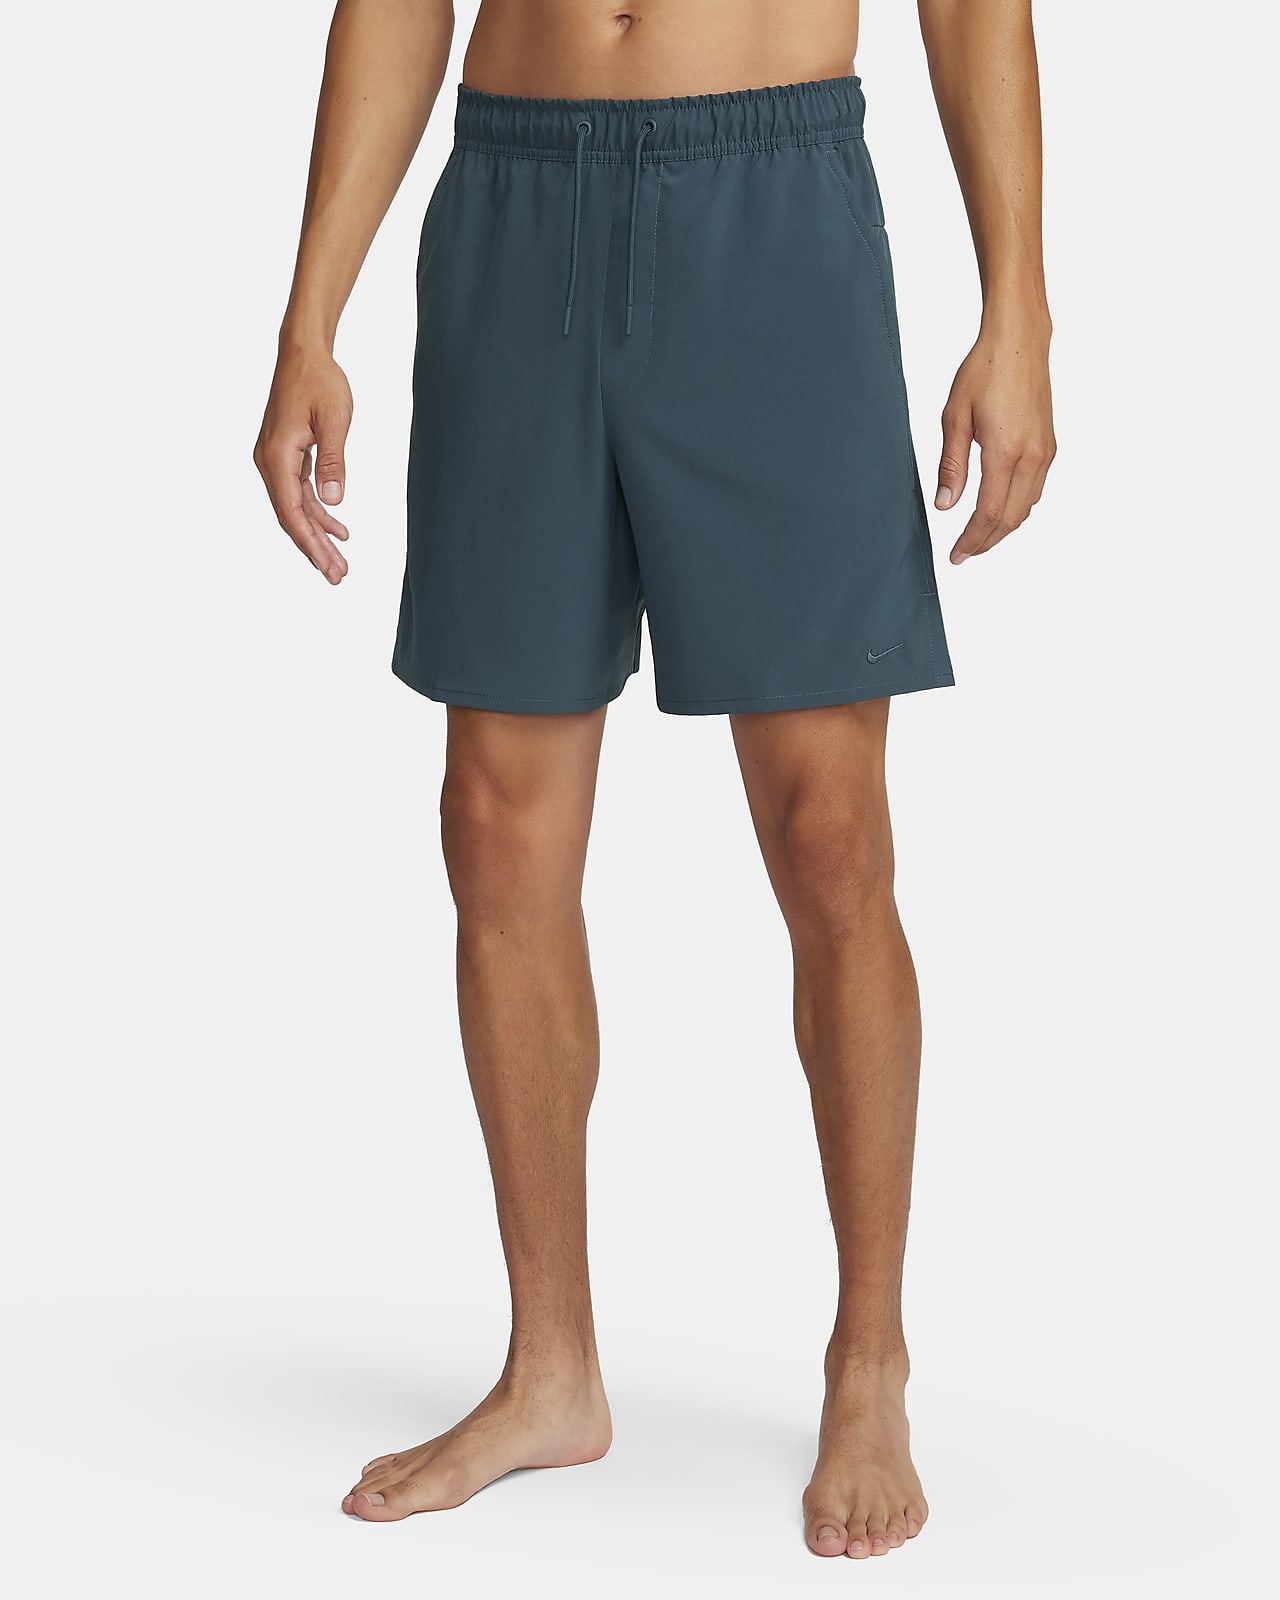 Nike Unlimited Pantalón corto Dri-FIT versátil de 18 cm sin forro - Hombre